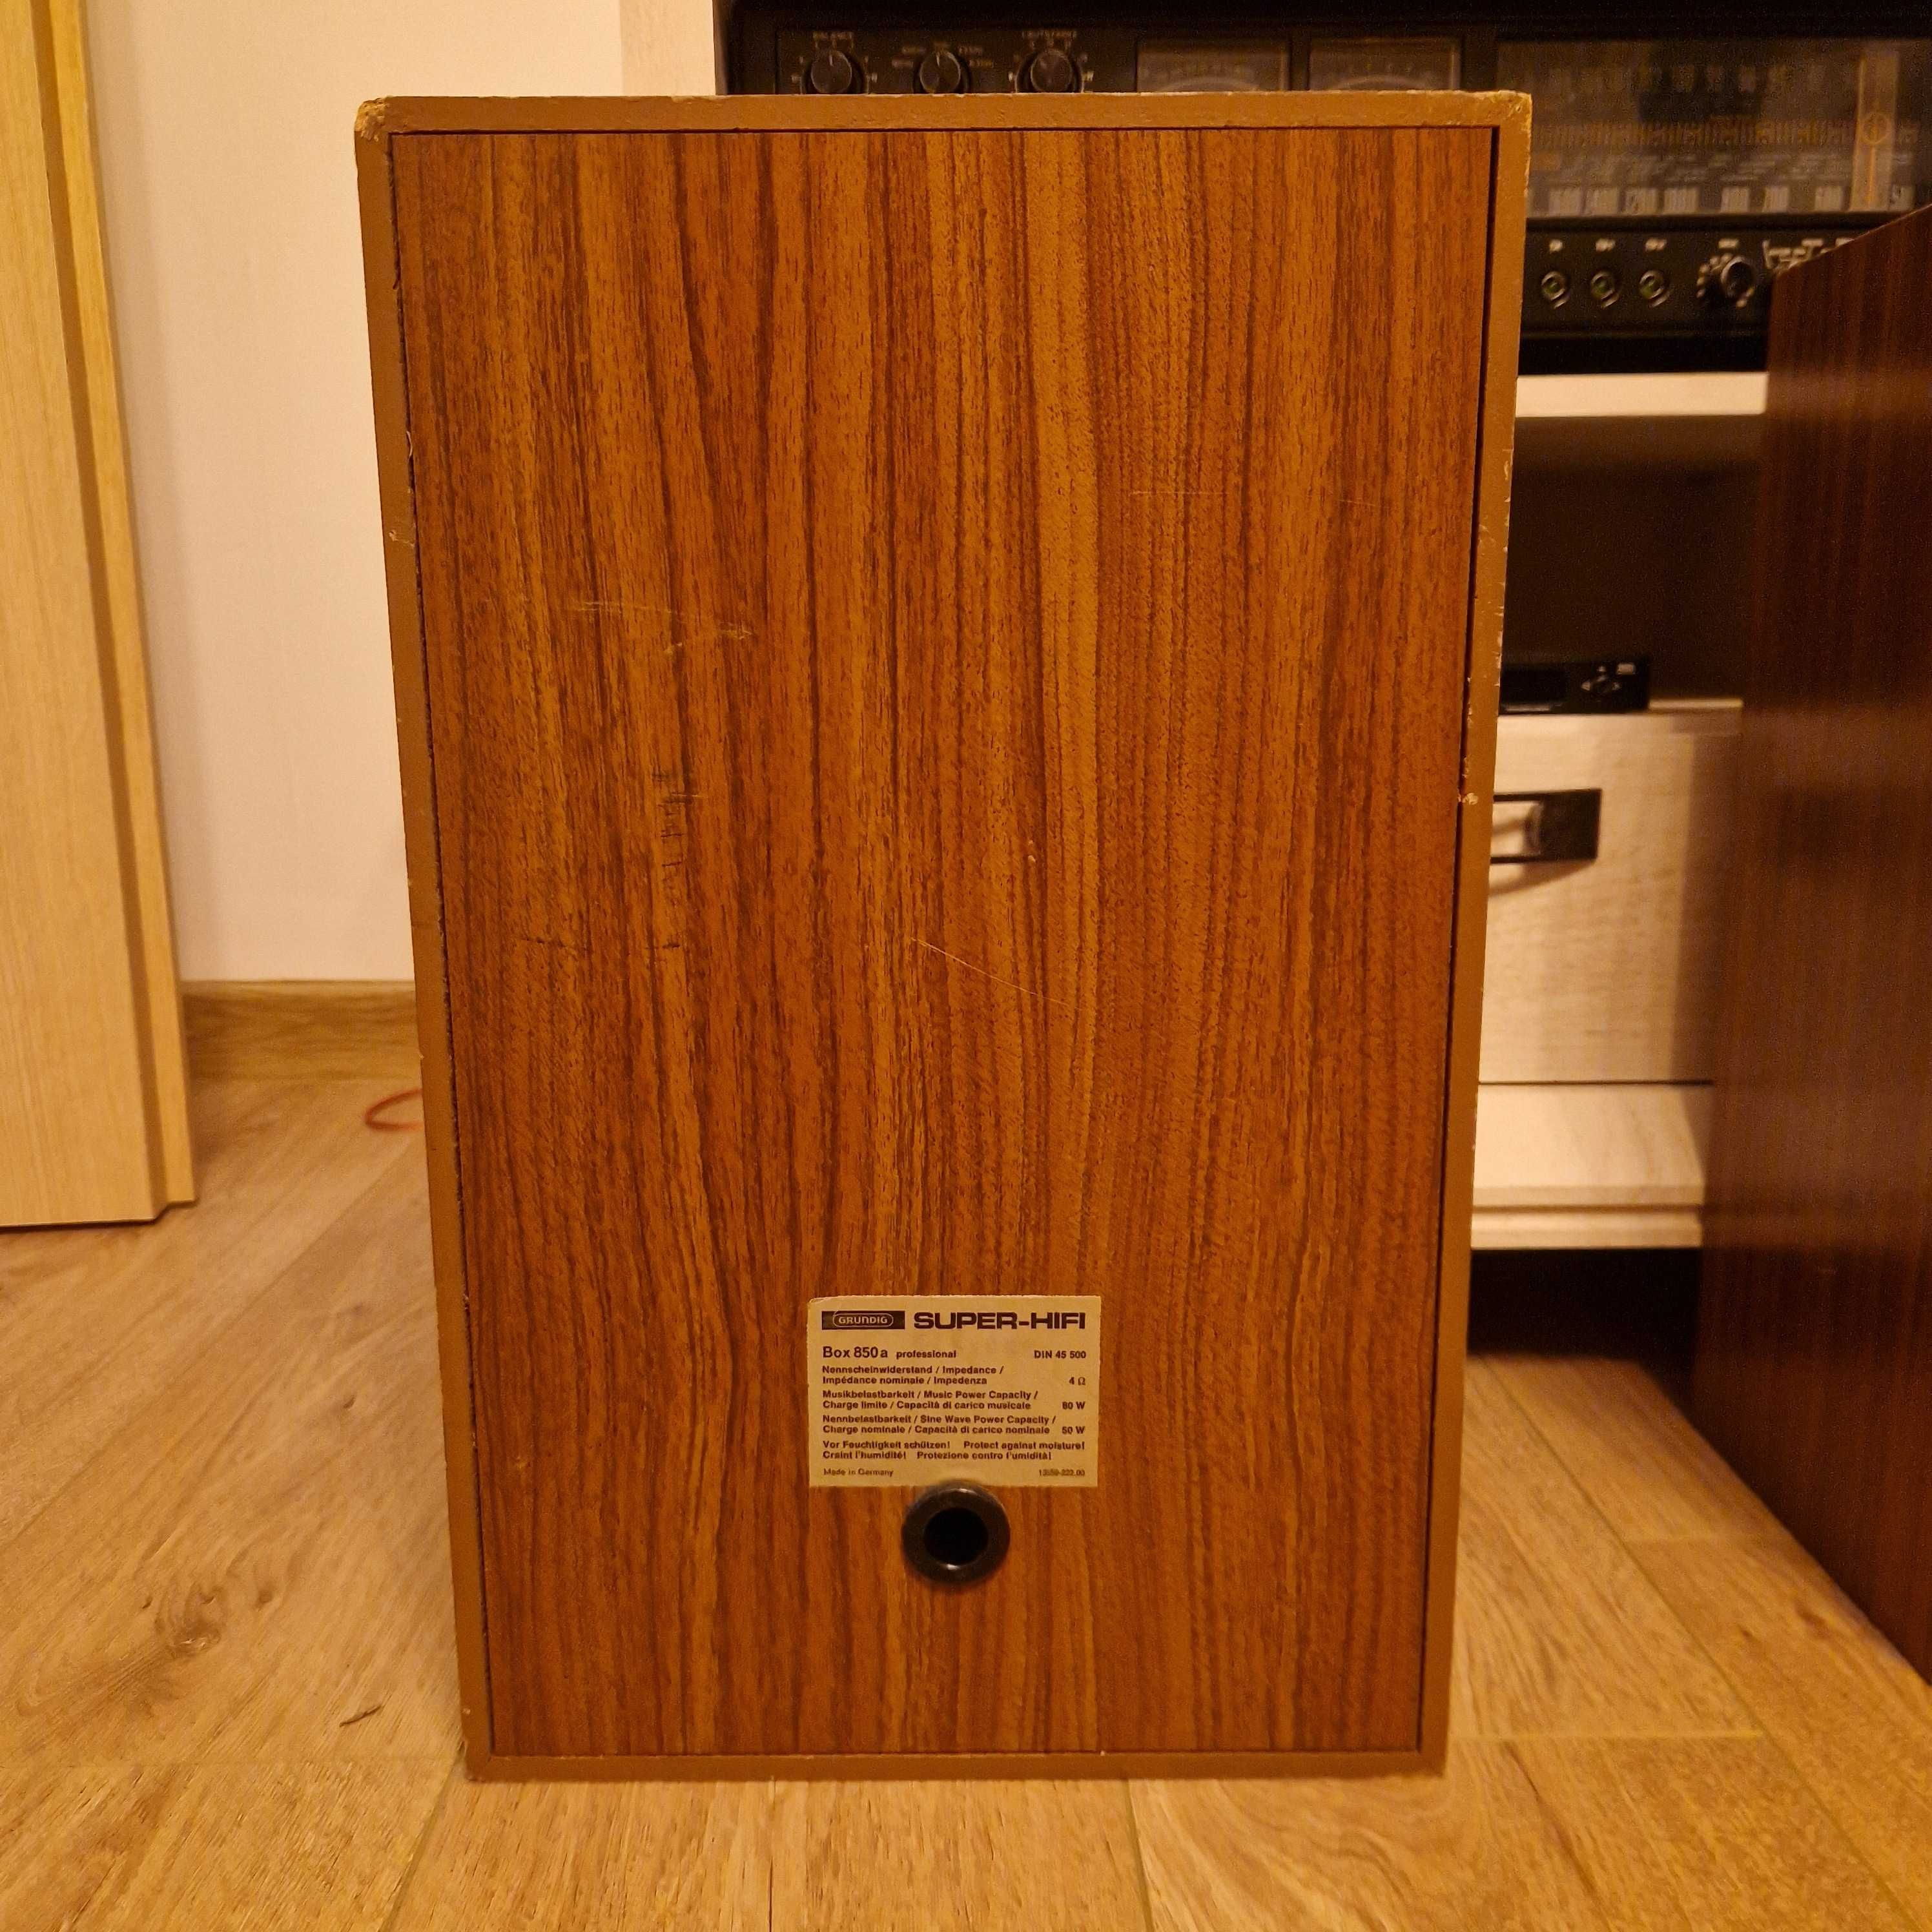 Grundig Box 850a Professional